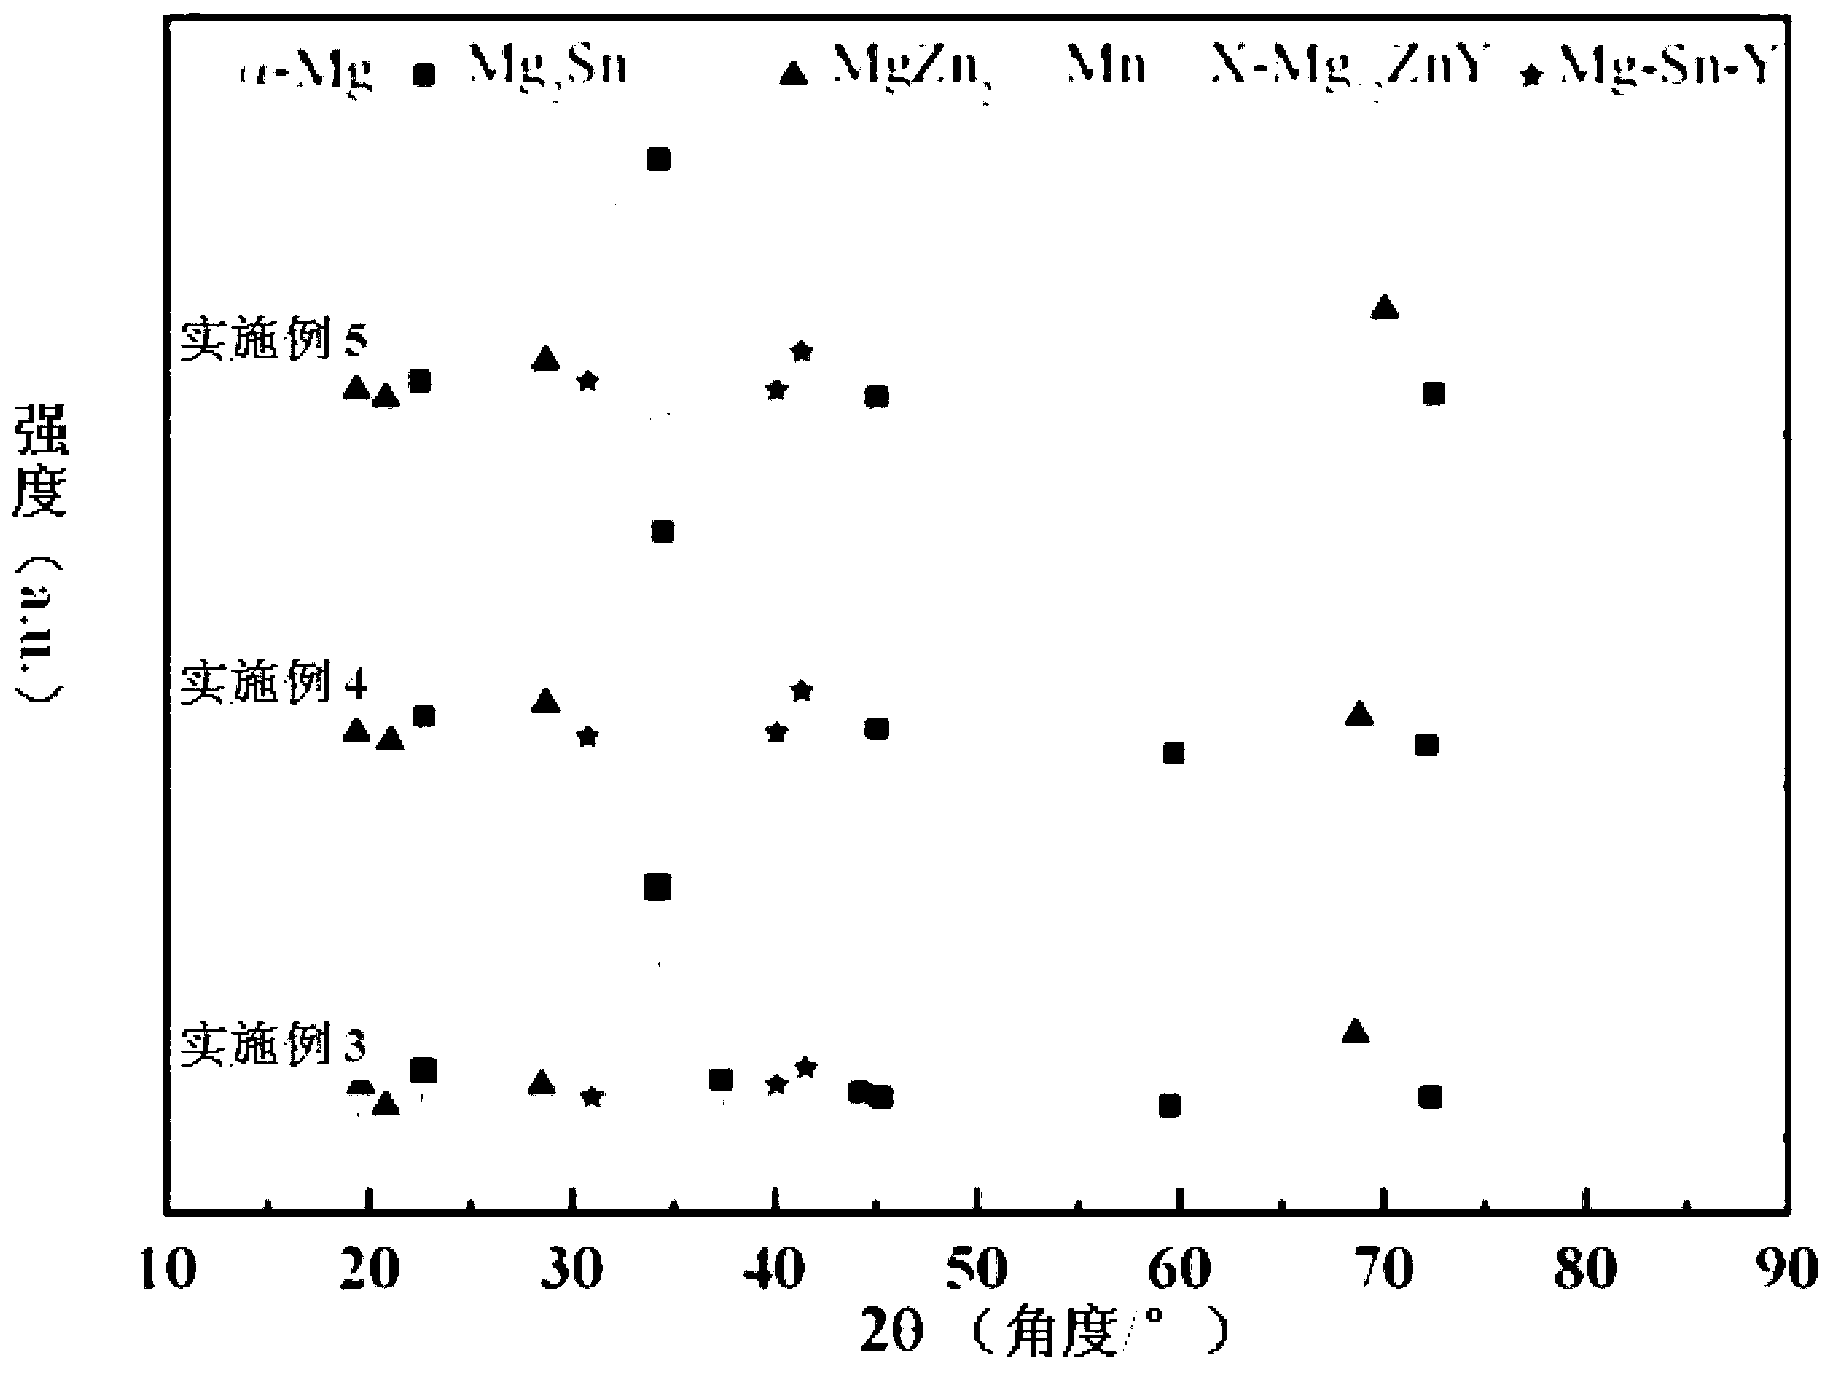 Magnesium-zinc-manganese-tin-yttrium alloy and preparation method of same